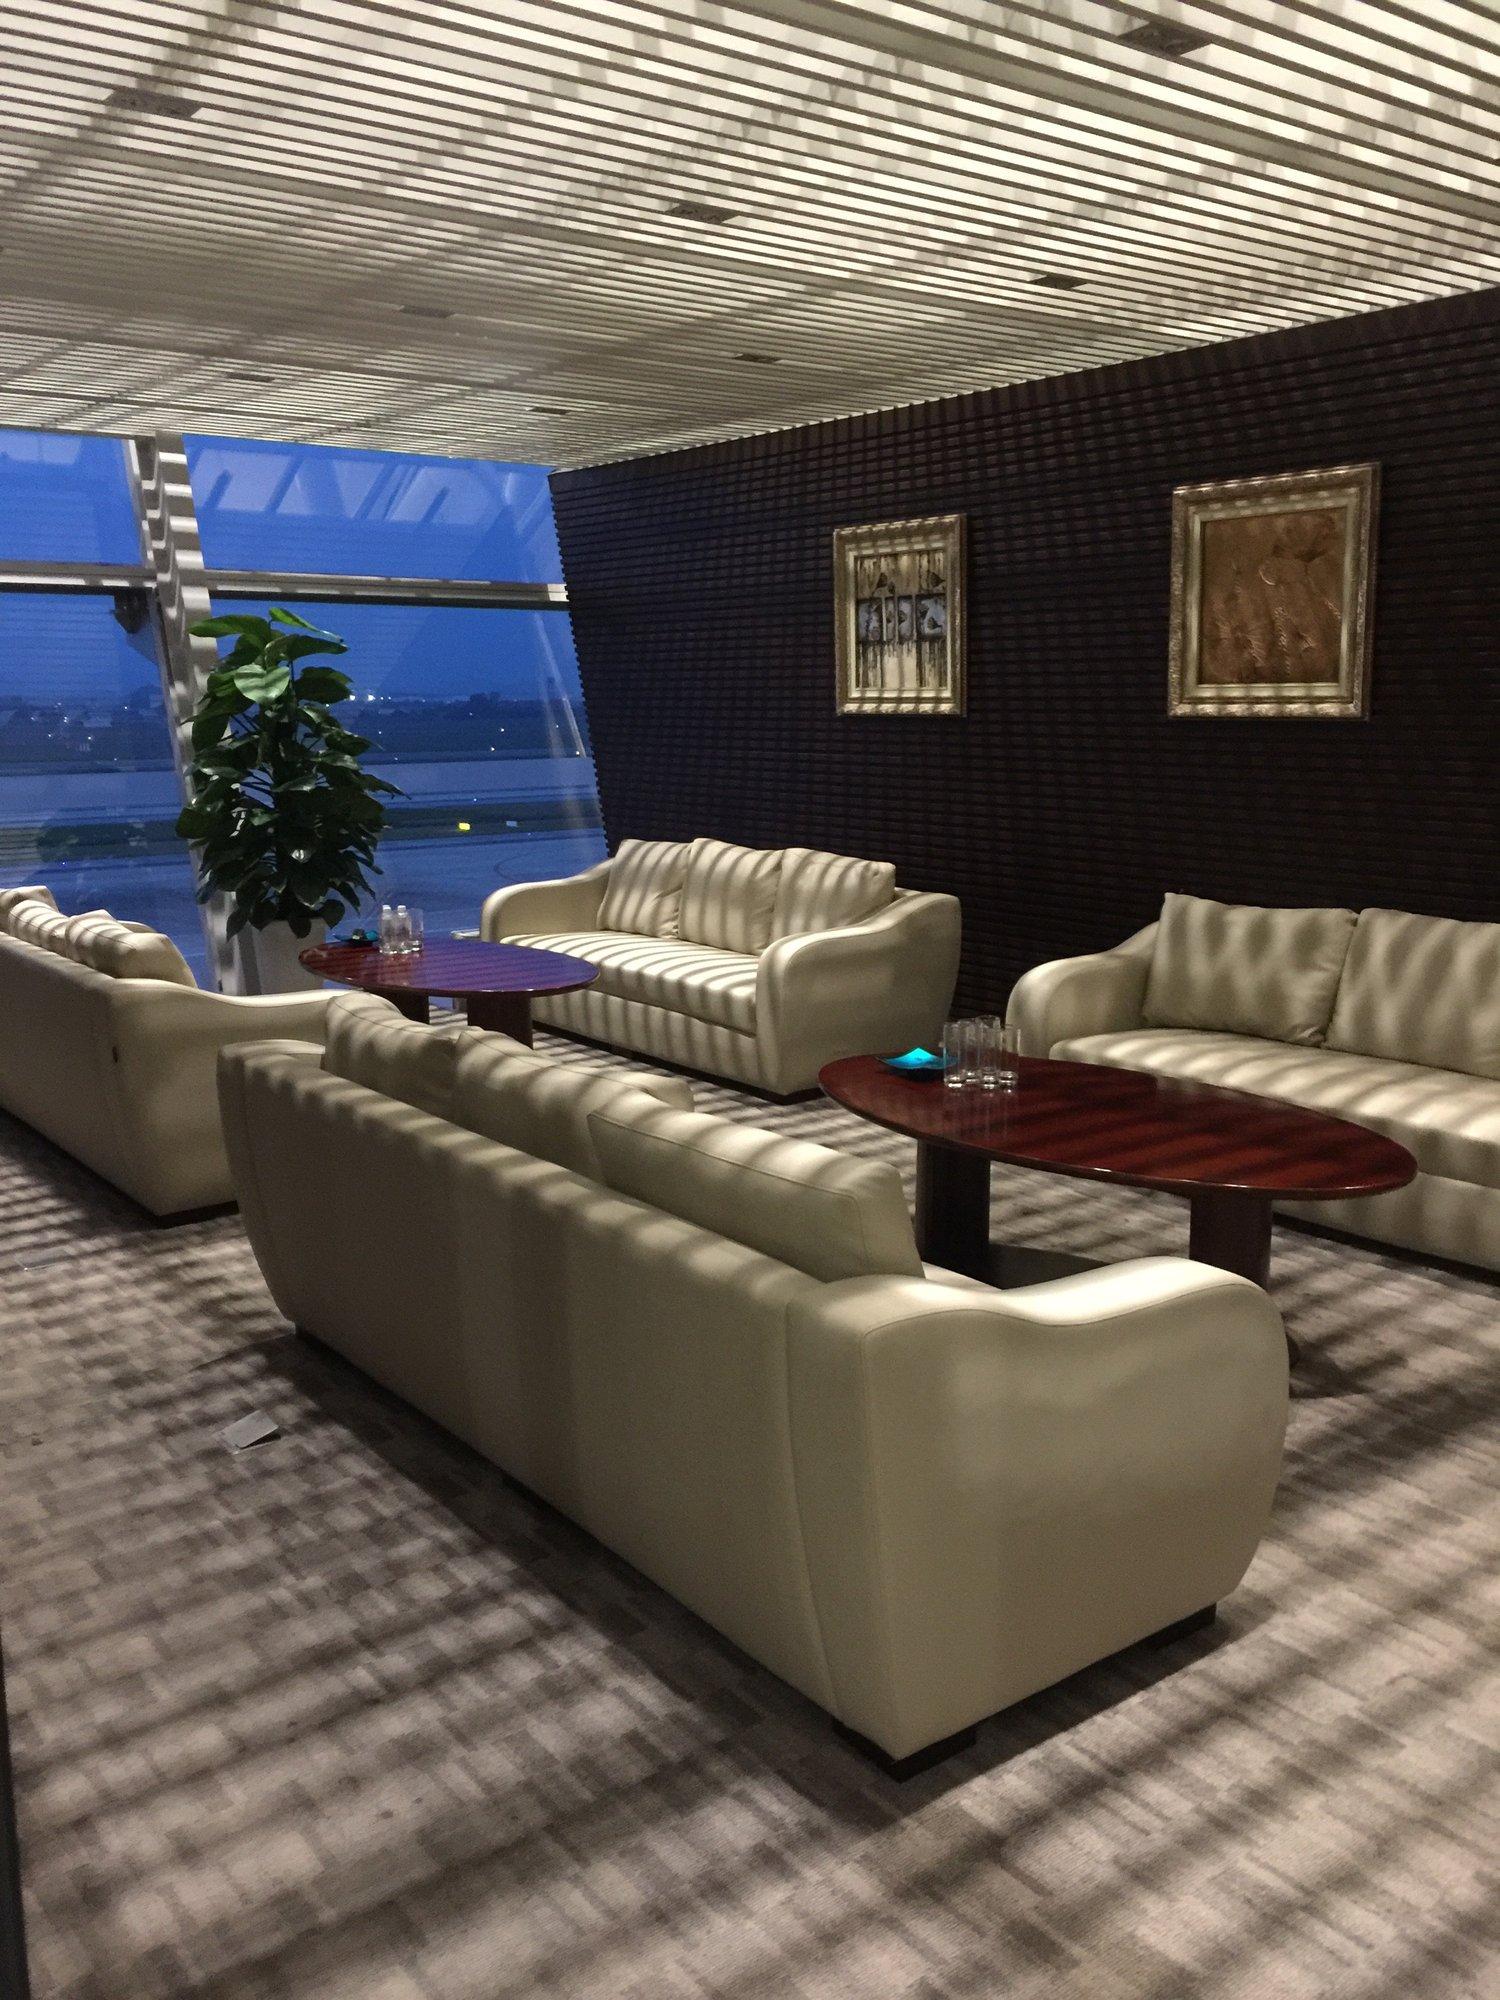 Noi Bai International Airport Business Lounge image 9 of 26